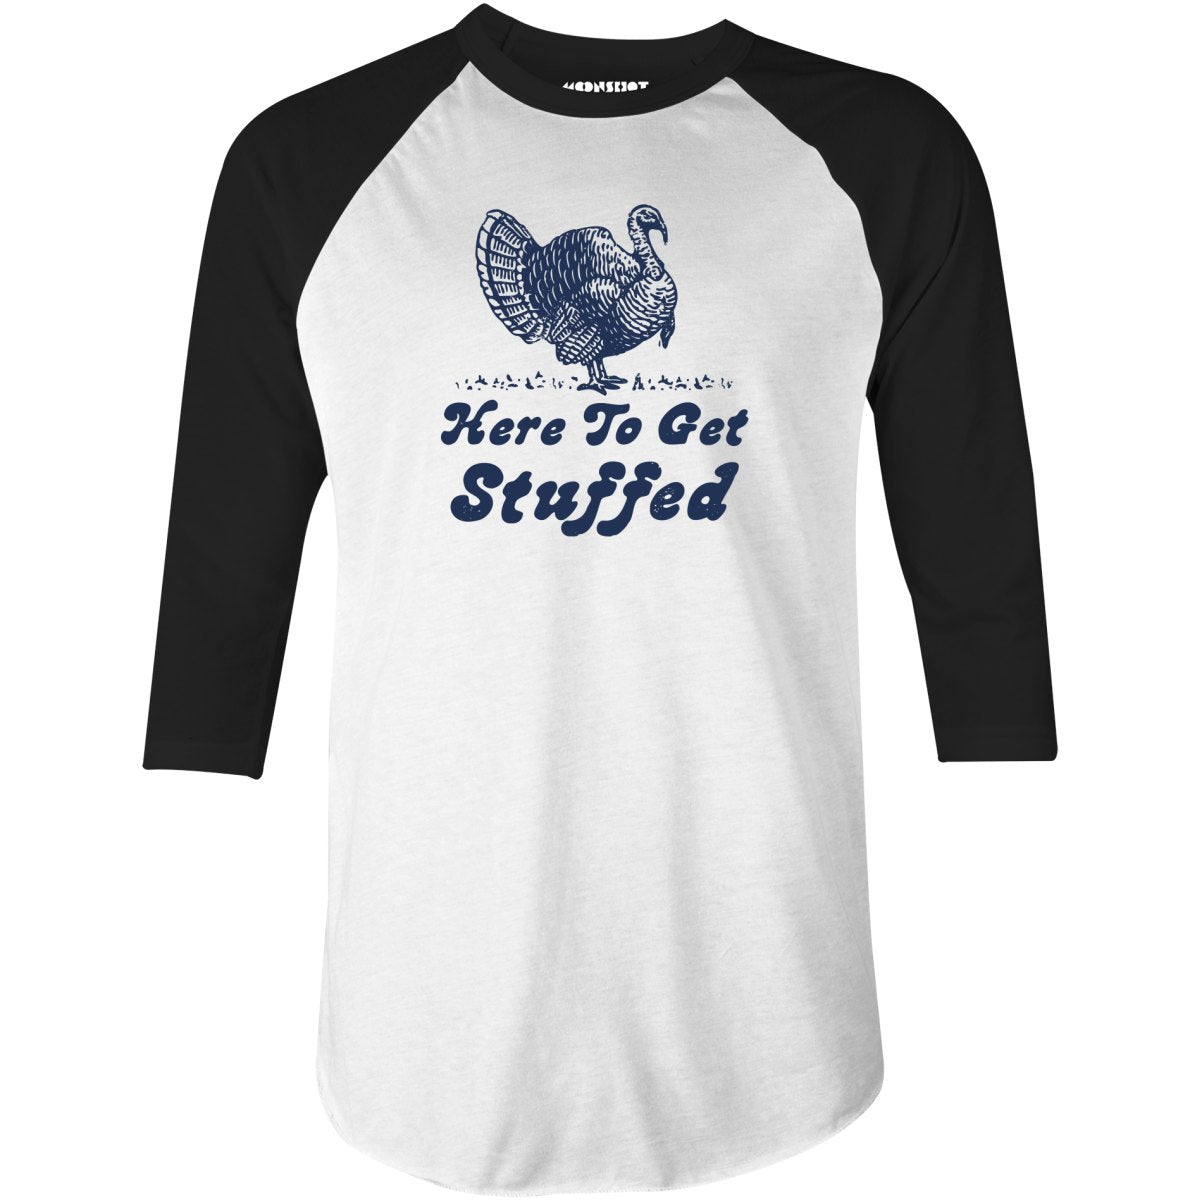 Here to Get Stuffed - 3/4 Sleeve Raglan T-Shirt